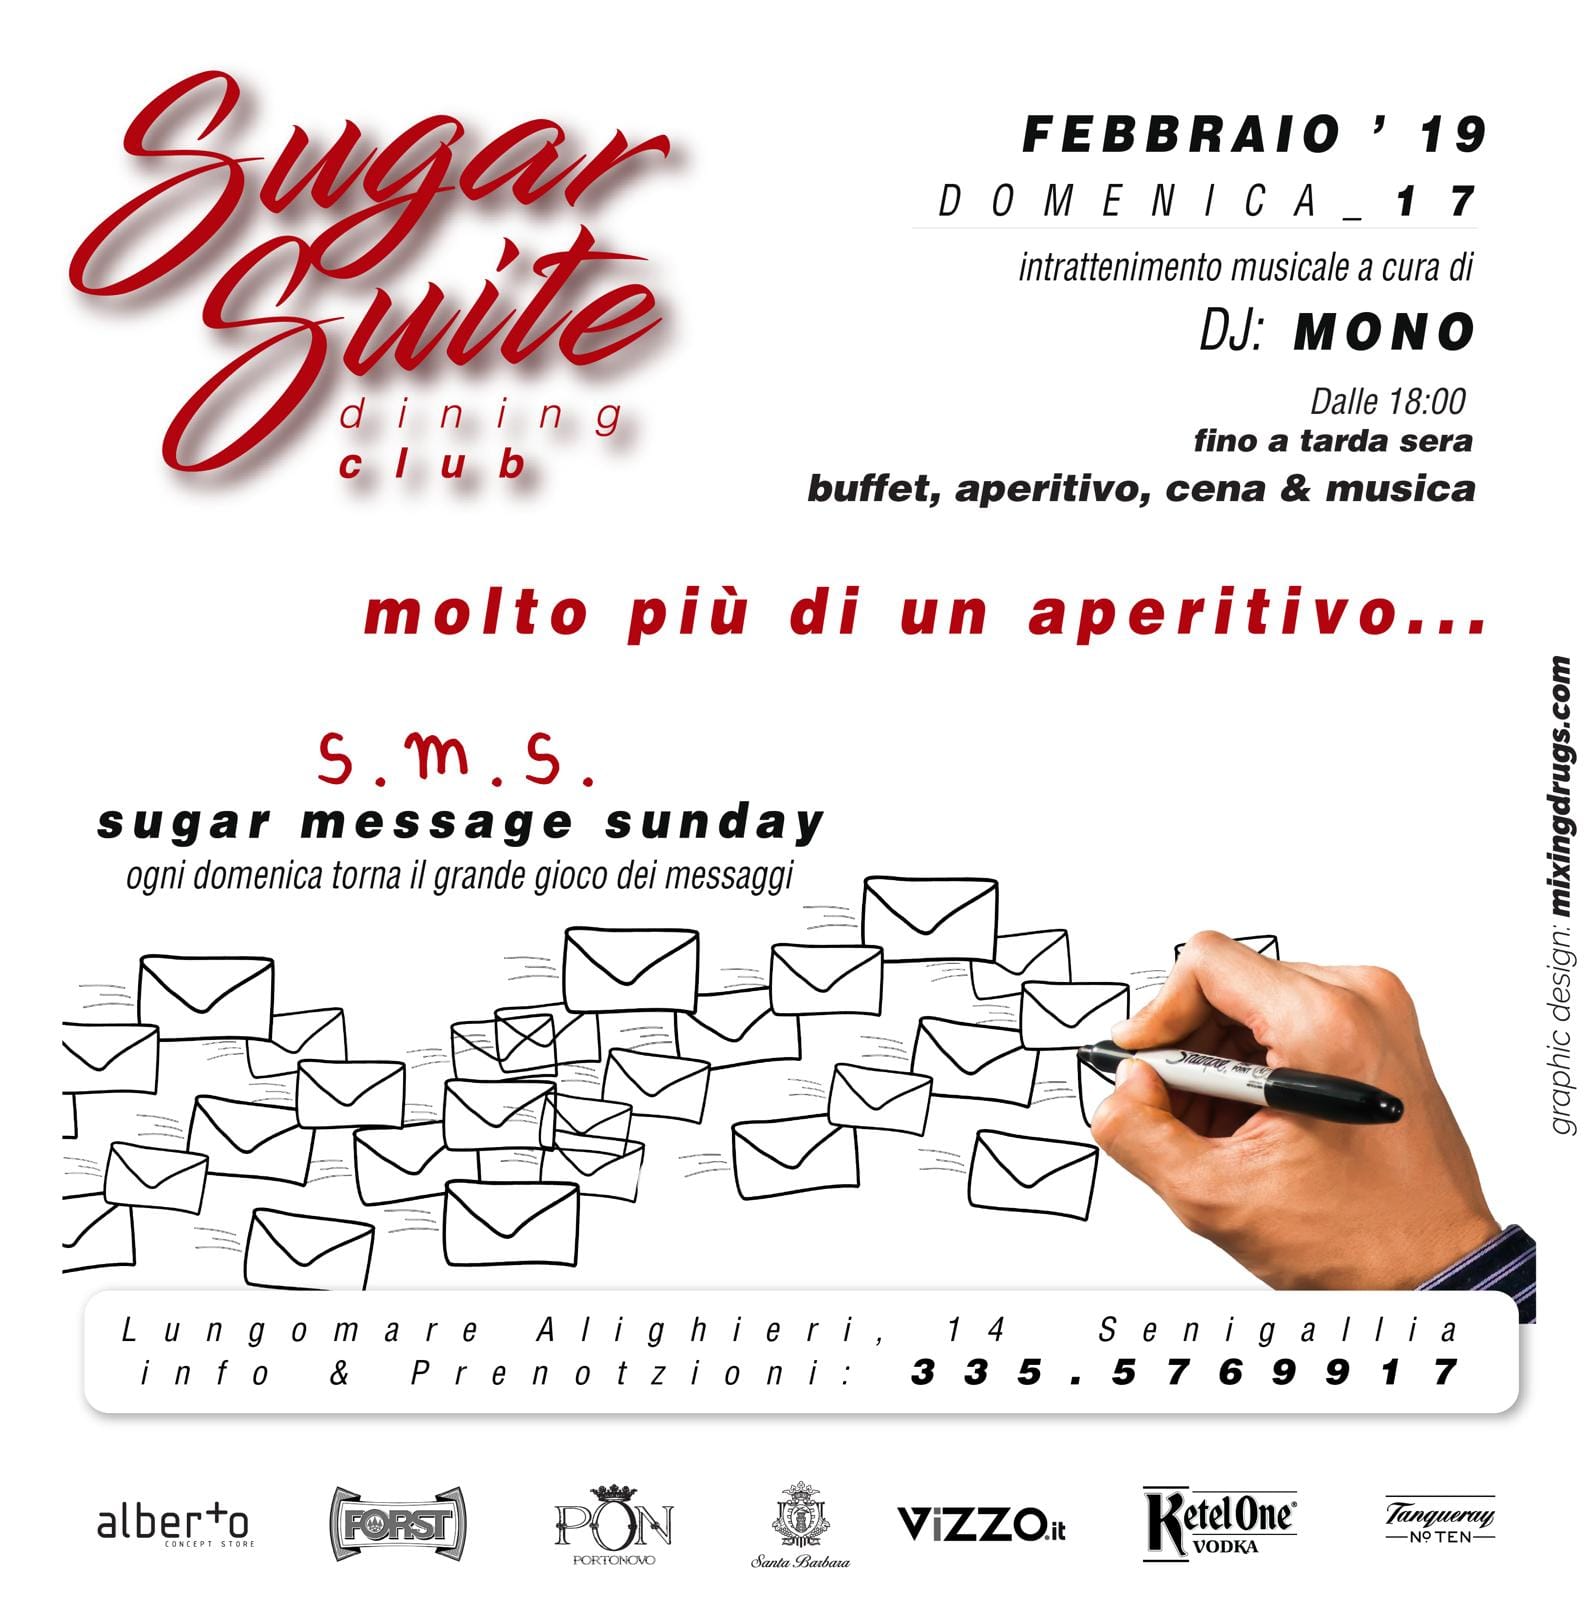 Message Sunday Sugar Suite Dinner Club Senigallia